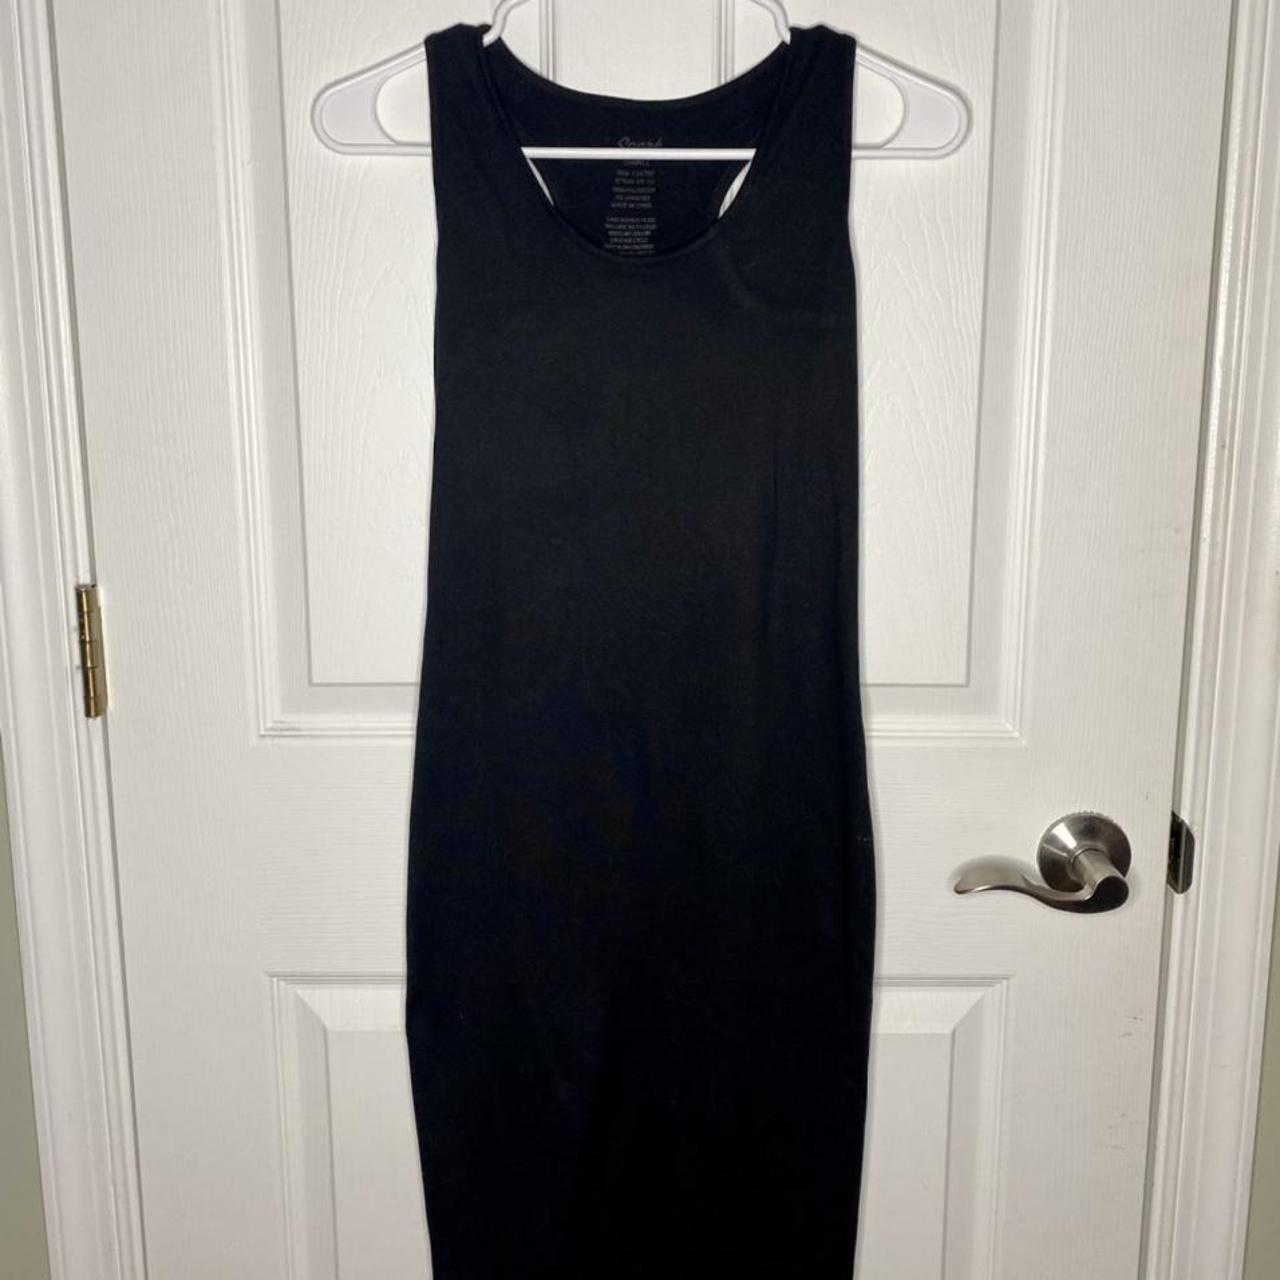 Black tight Maxi Dress🖤 This breathable back dress... - Depop